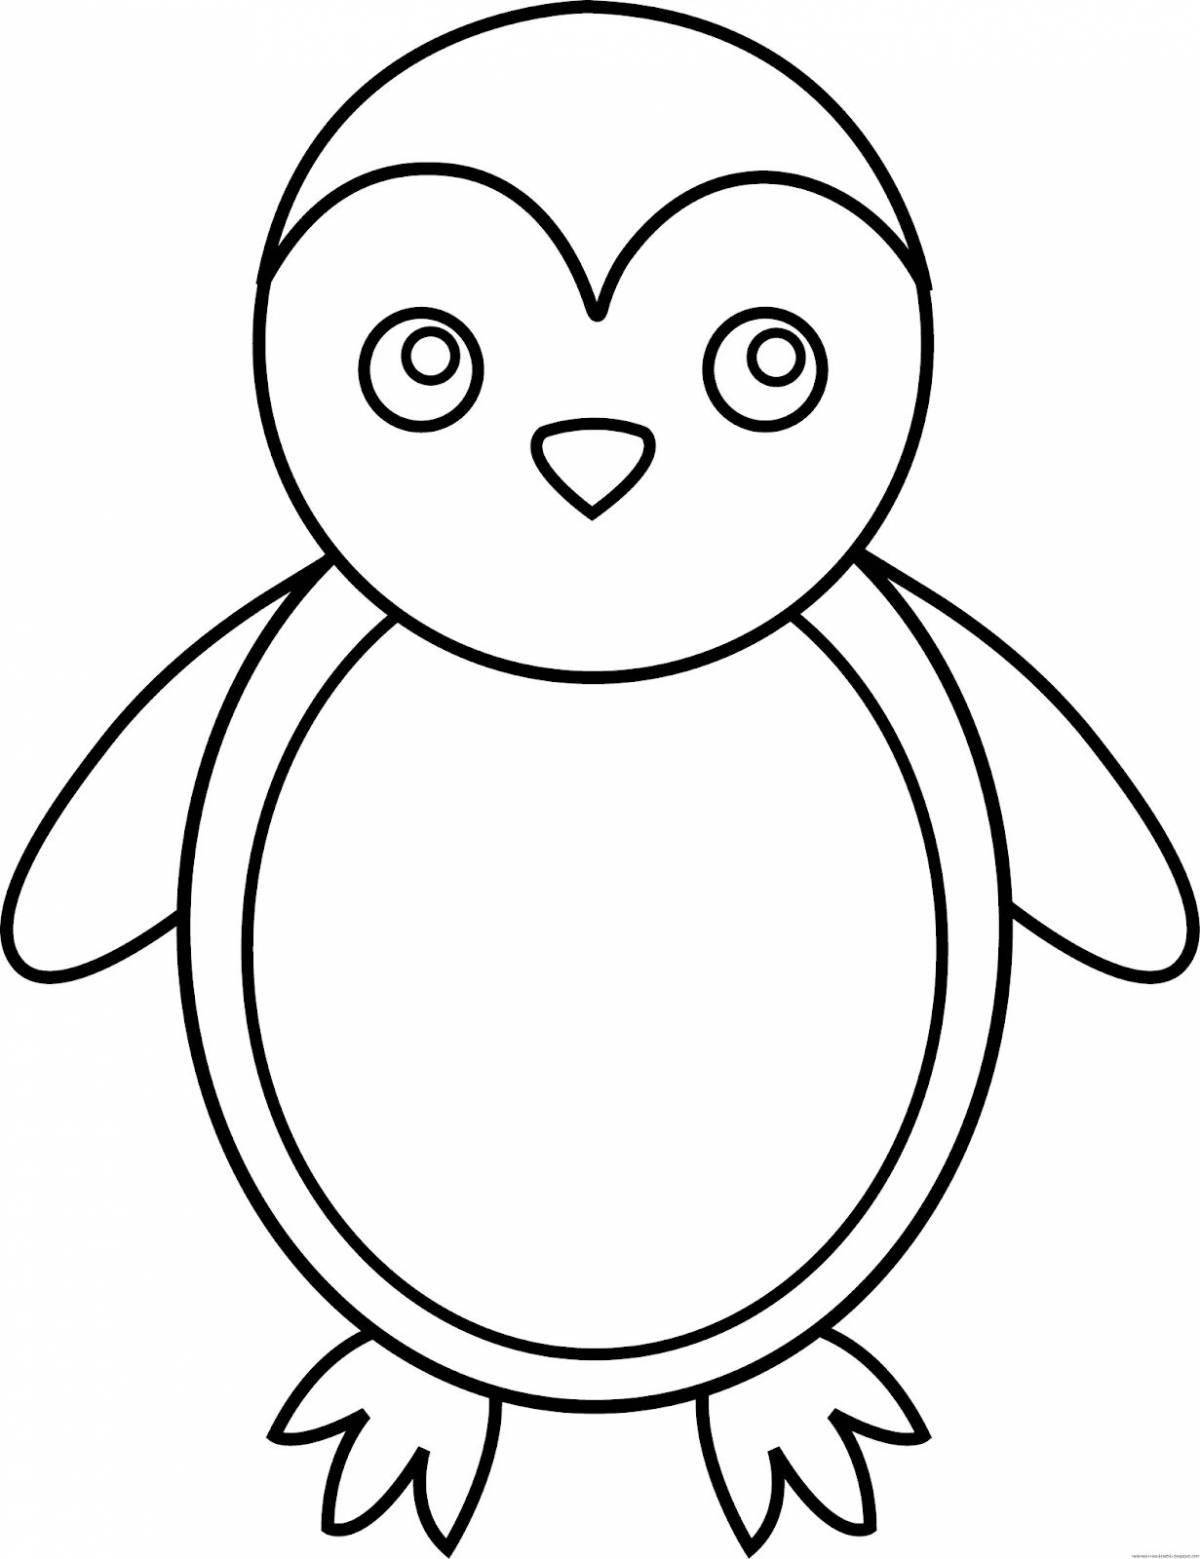 A fun penguin coloring book for kids